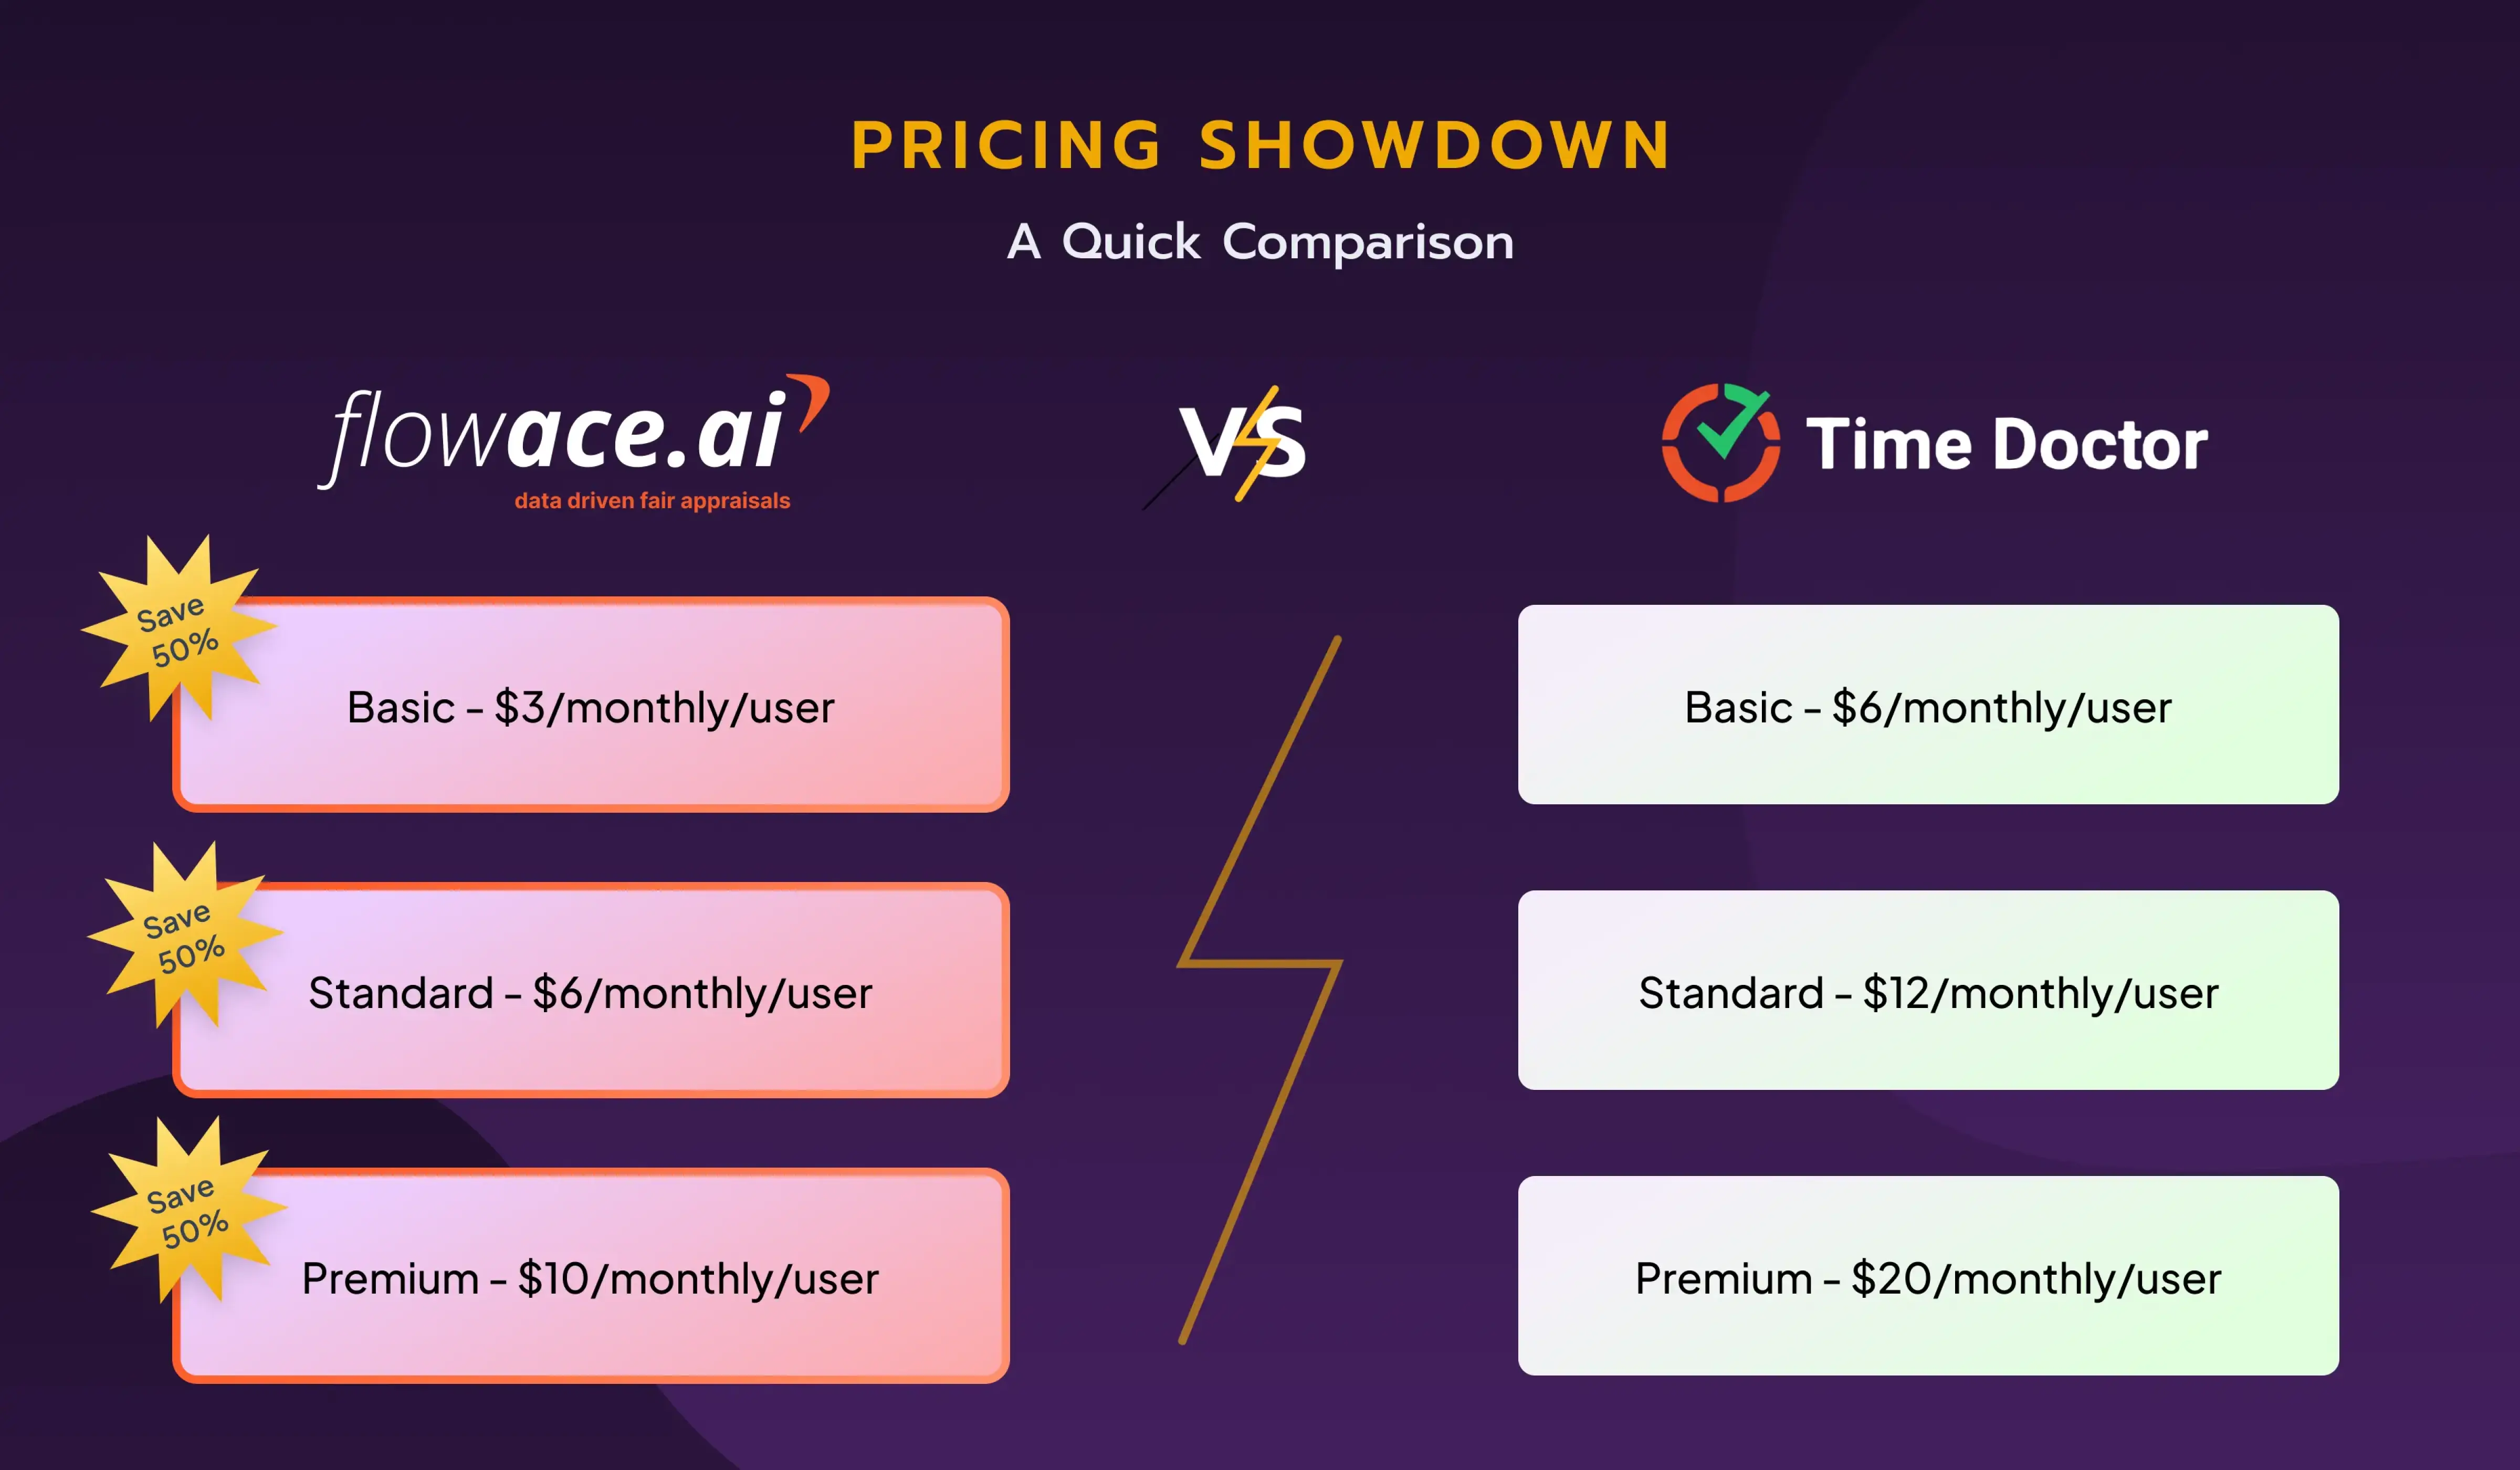 Flowace vs Time Doctor pricing comparison